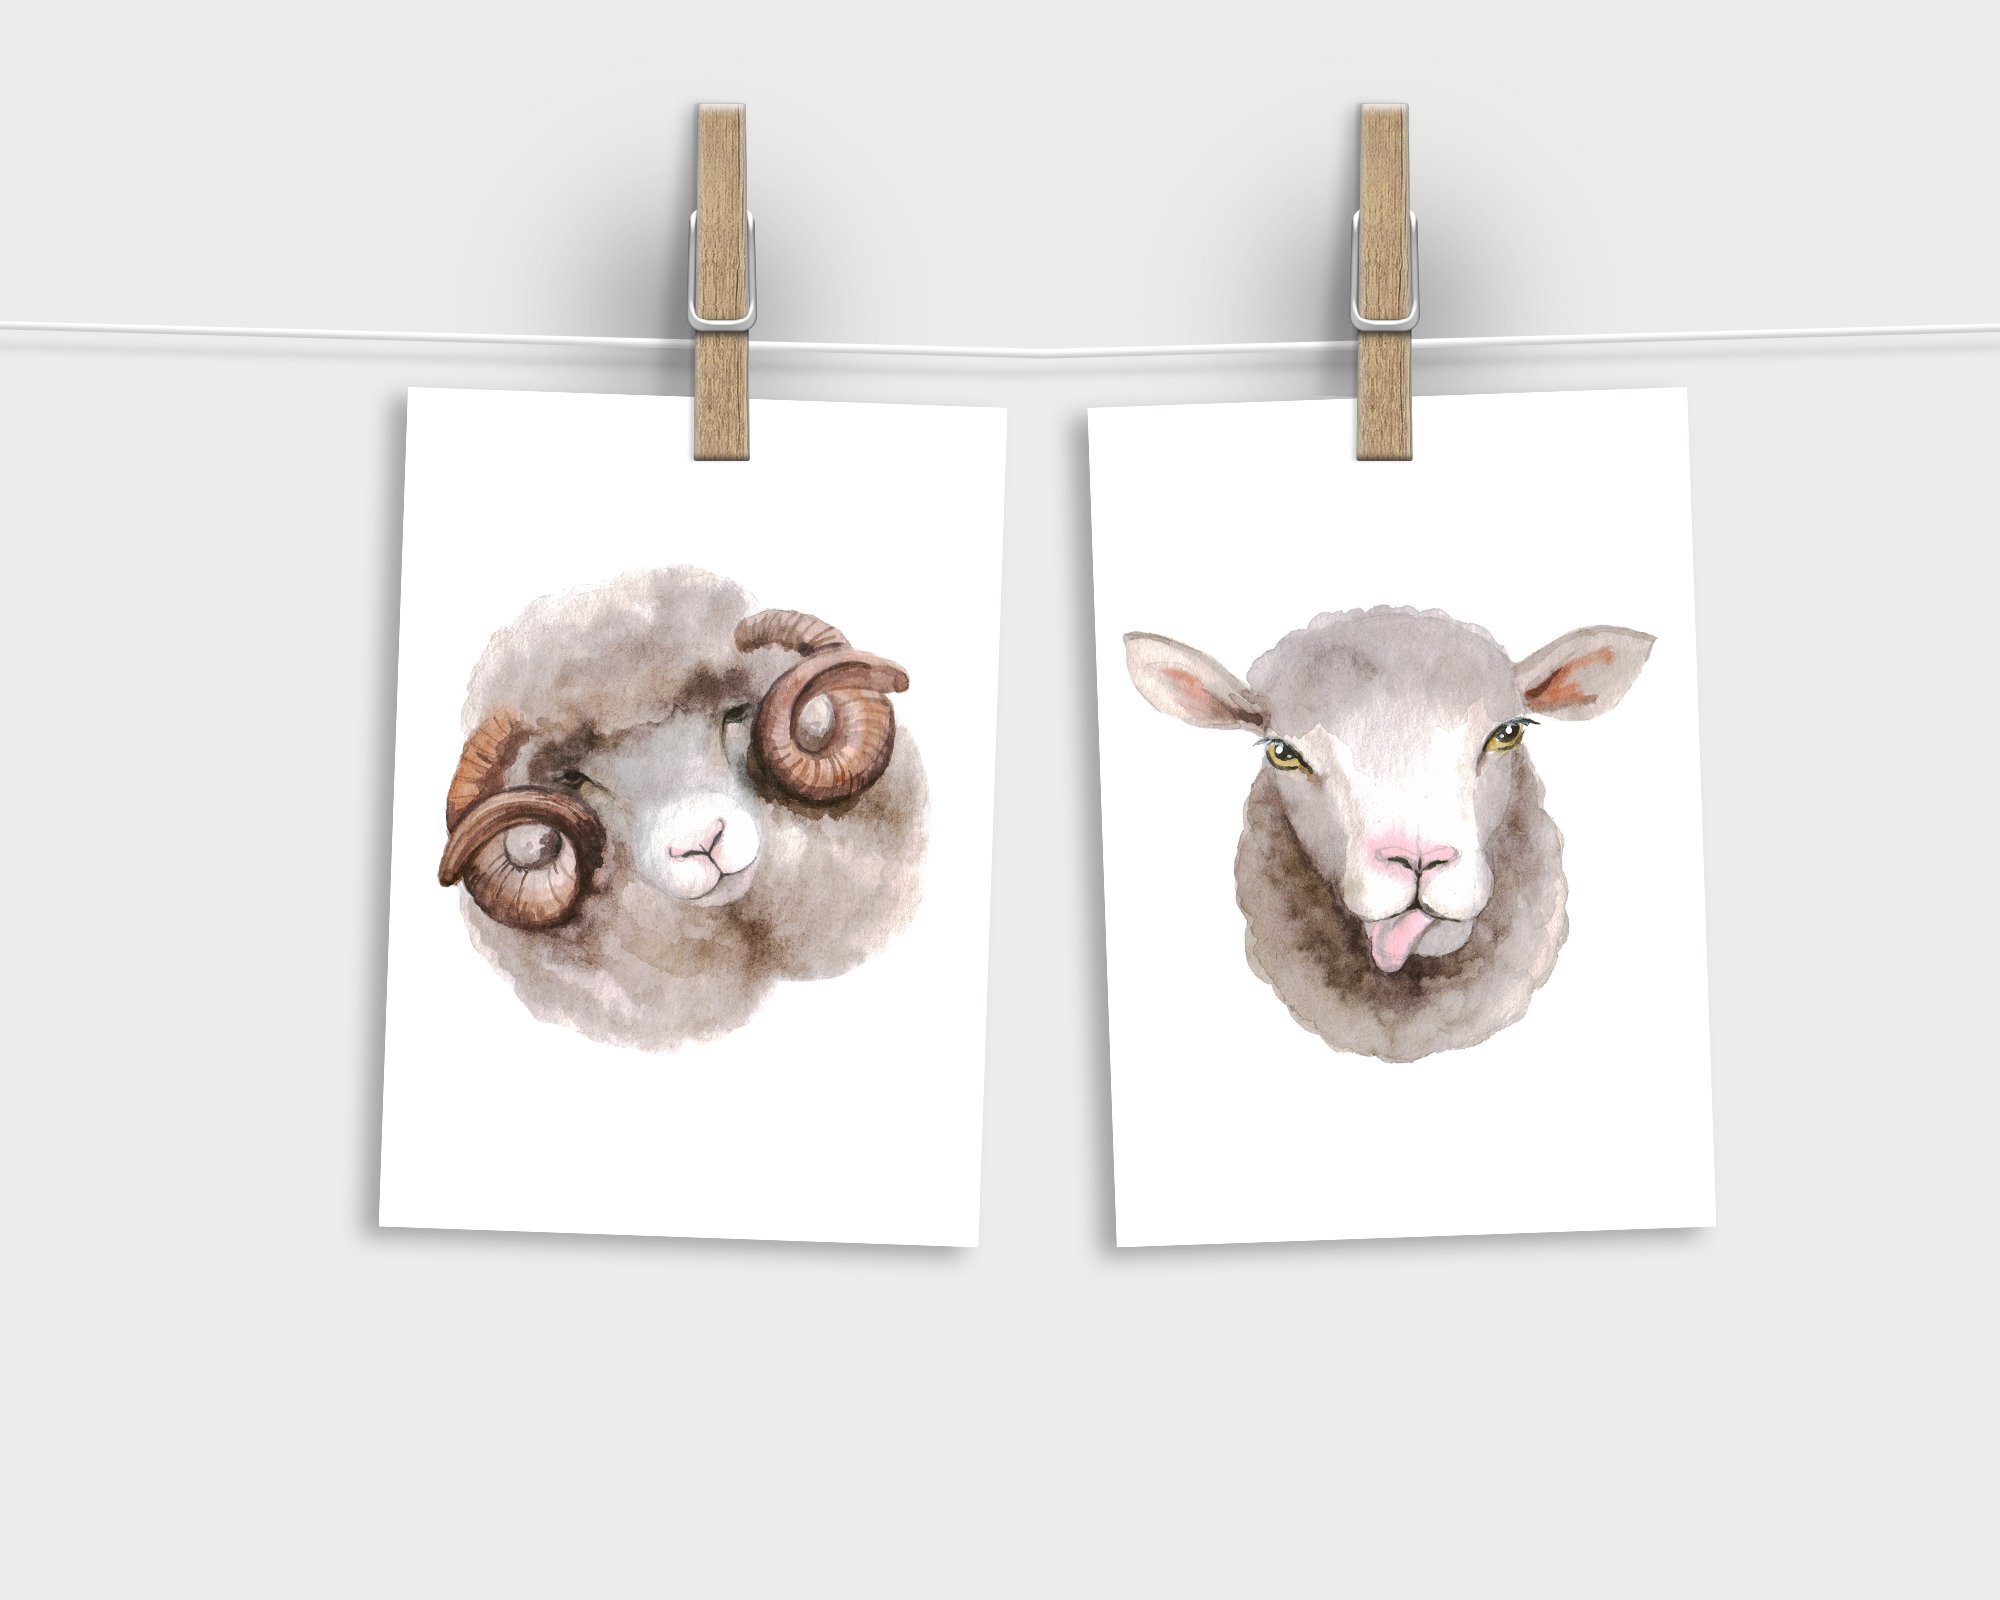 Watercolor Clipart. Sheep Clip Art.